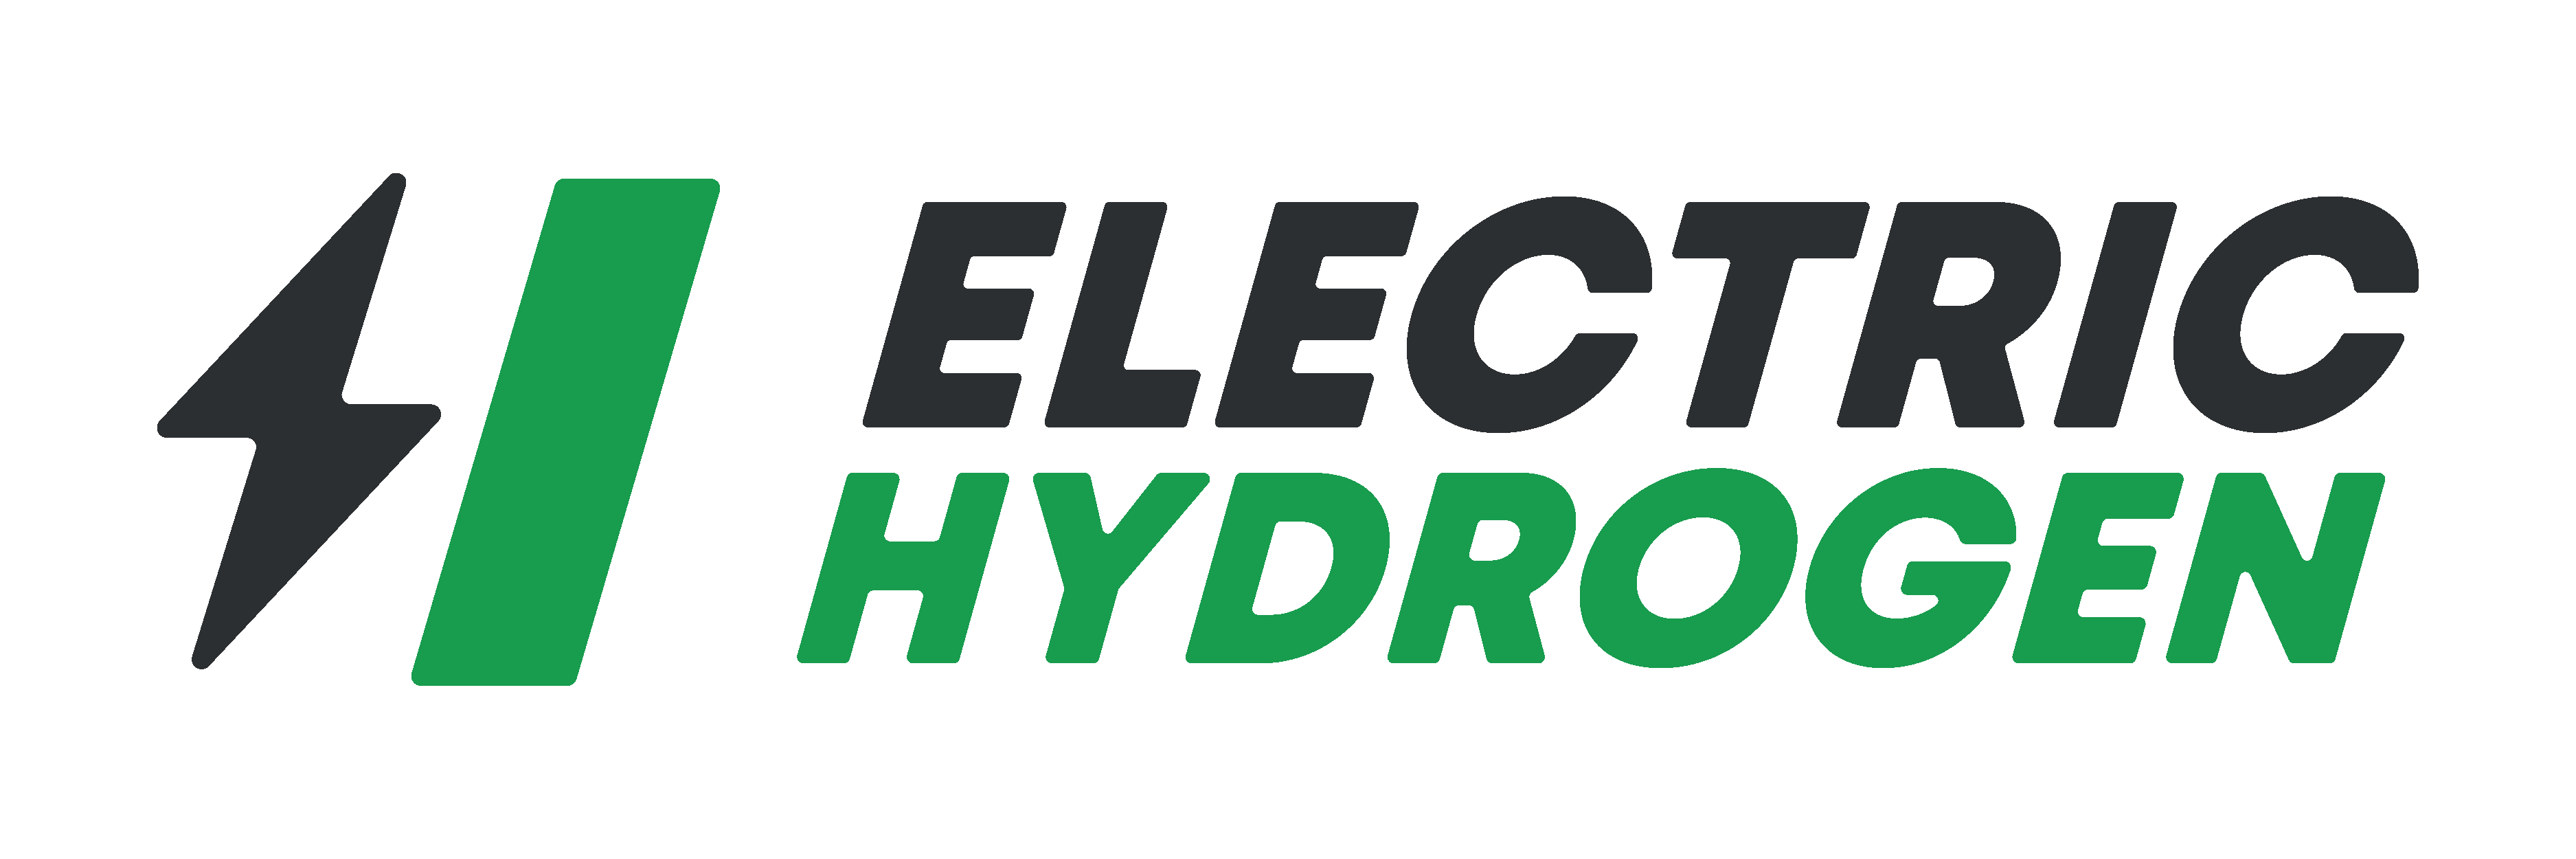 Electric Hydrogen